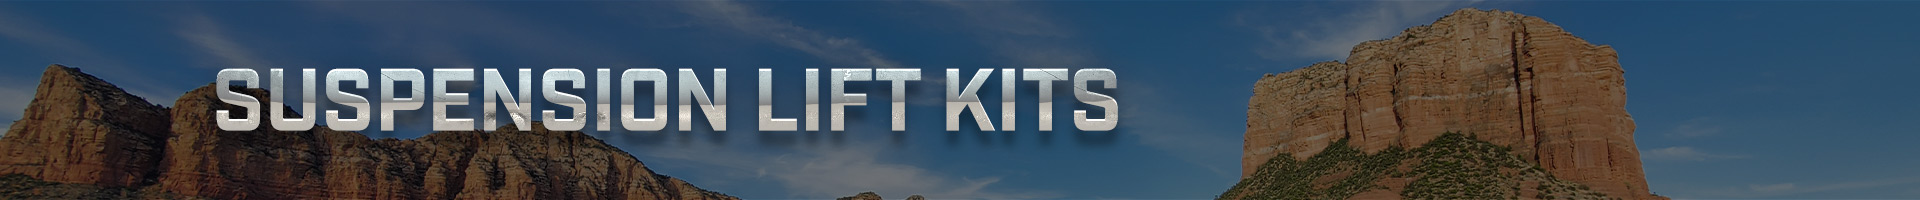 Lift Kits